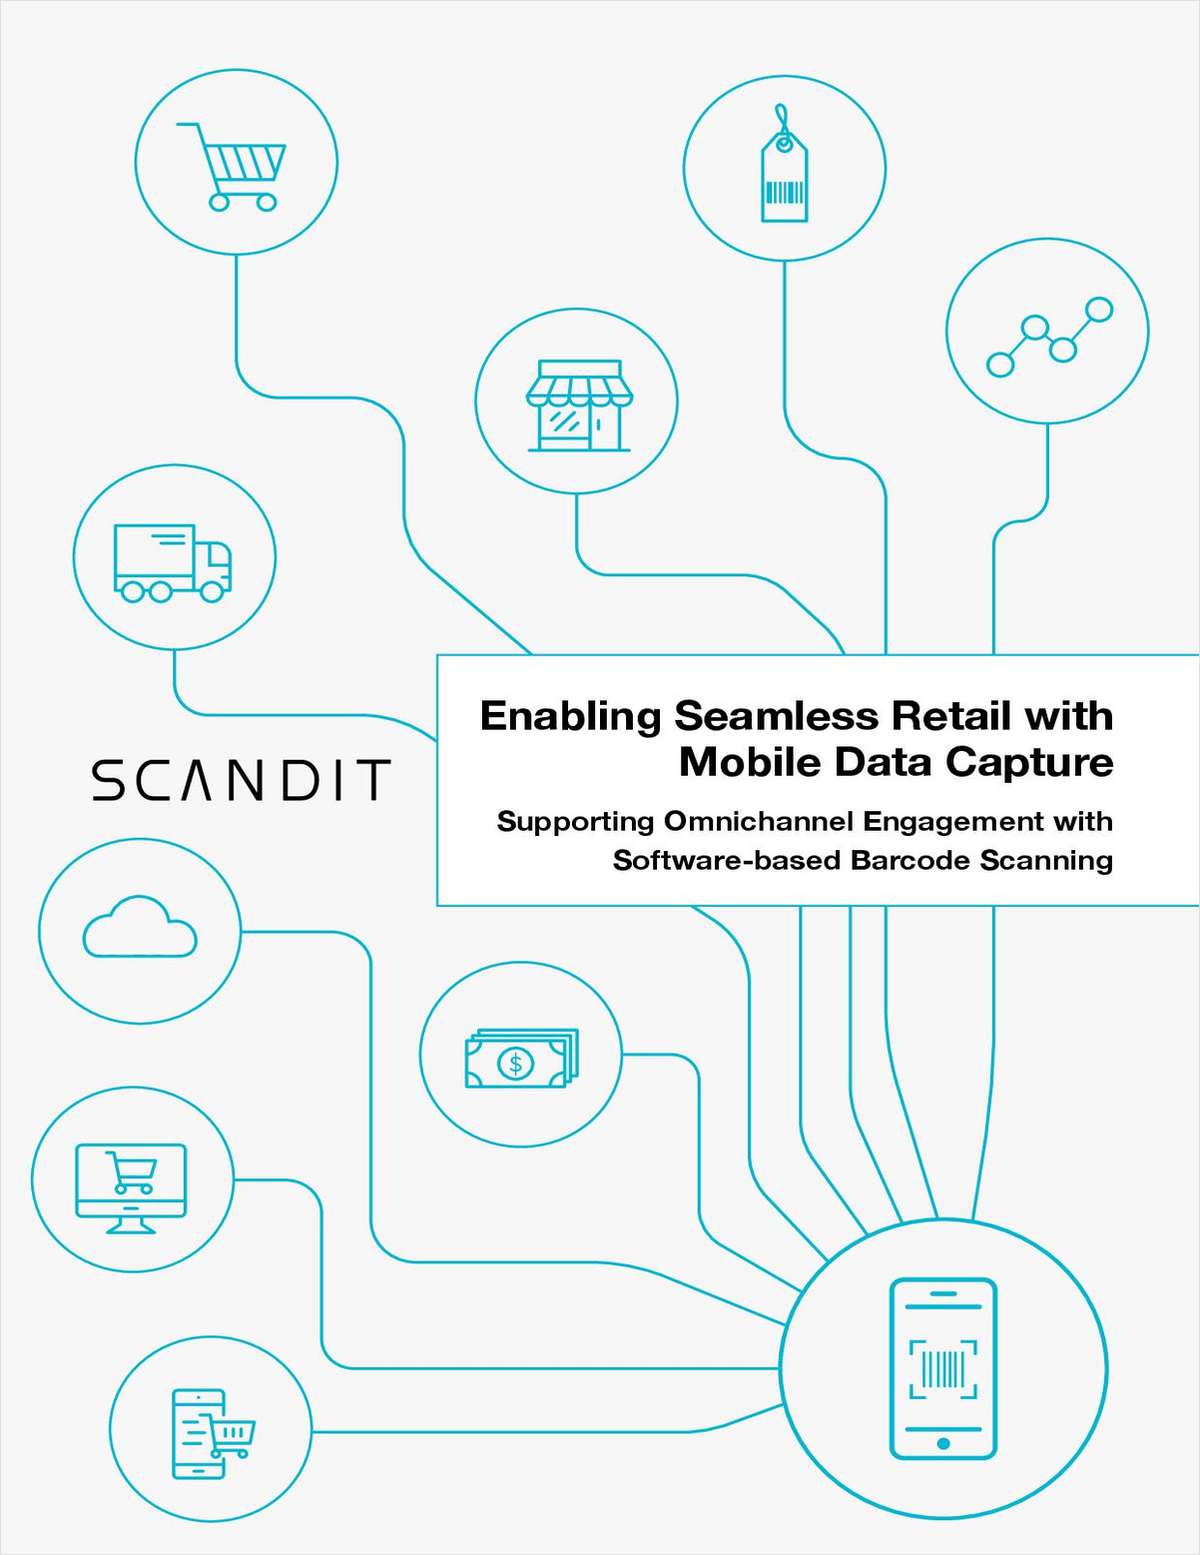 Mobile Data Capture Solution Deployment - Enabling Seamless Retail